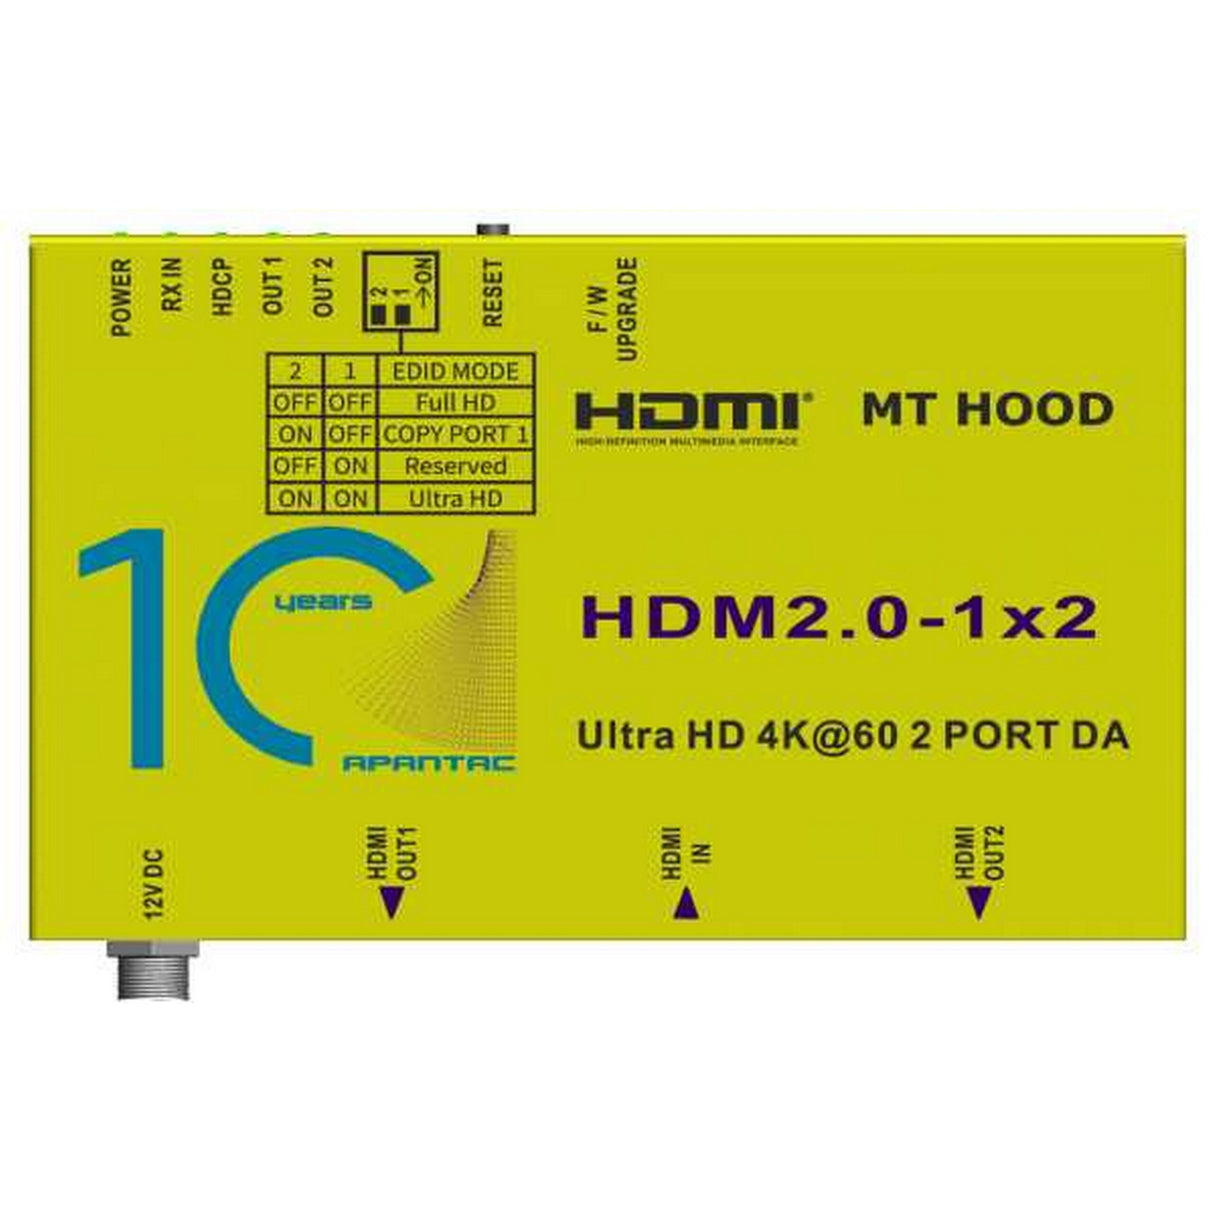 Apantac HDM2.0-1x2-II 1 x 2 HDMI 2.0 Splitter